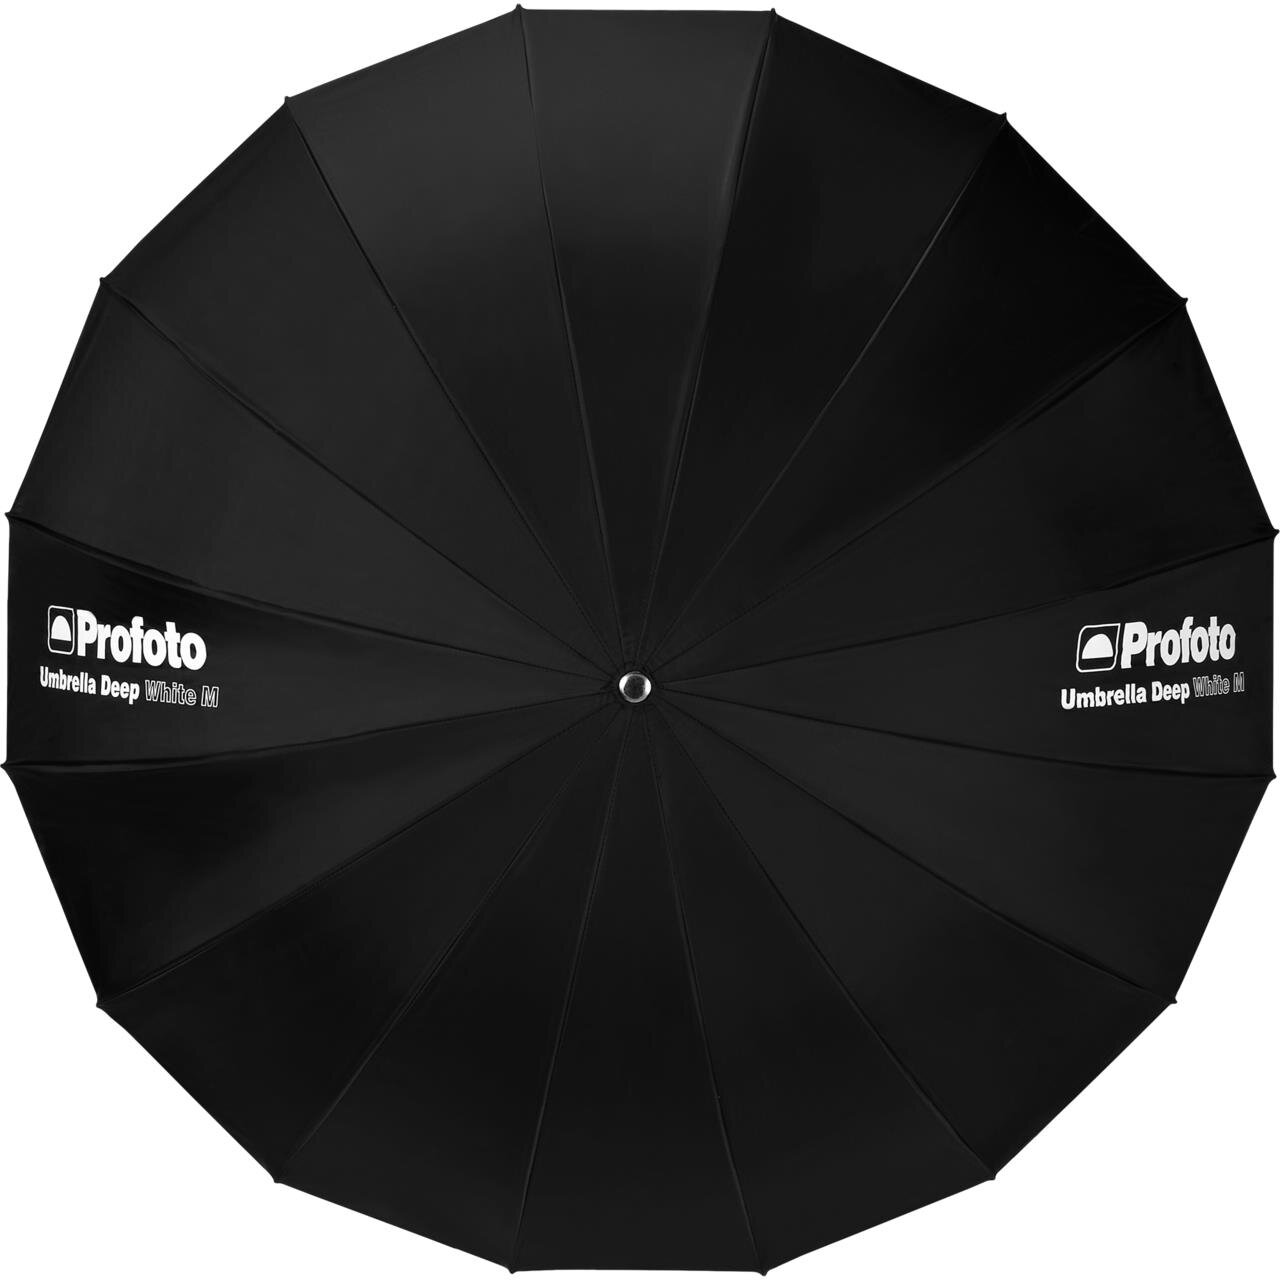 100986_d_Profoto-Umbrella-Deep-White-M-back_ProductImage.png.jpeg